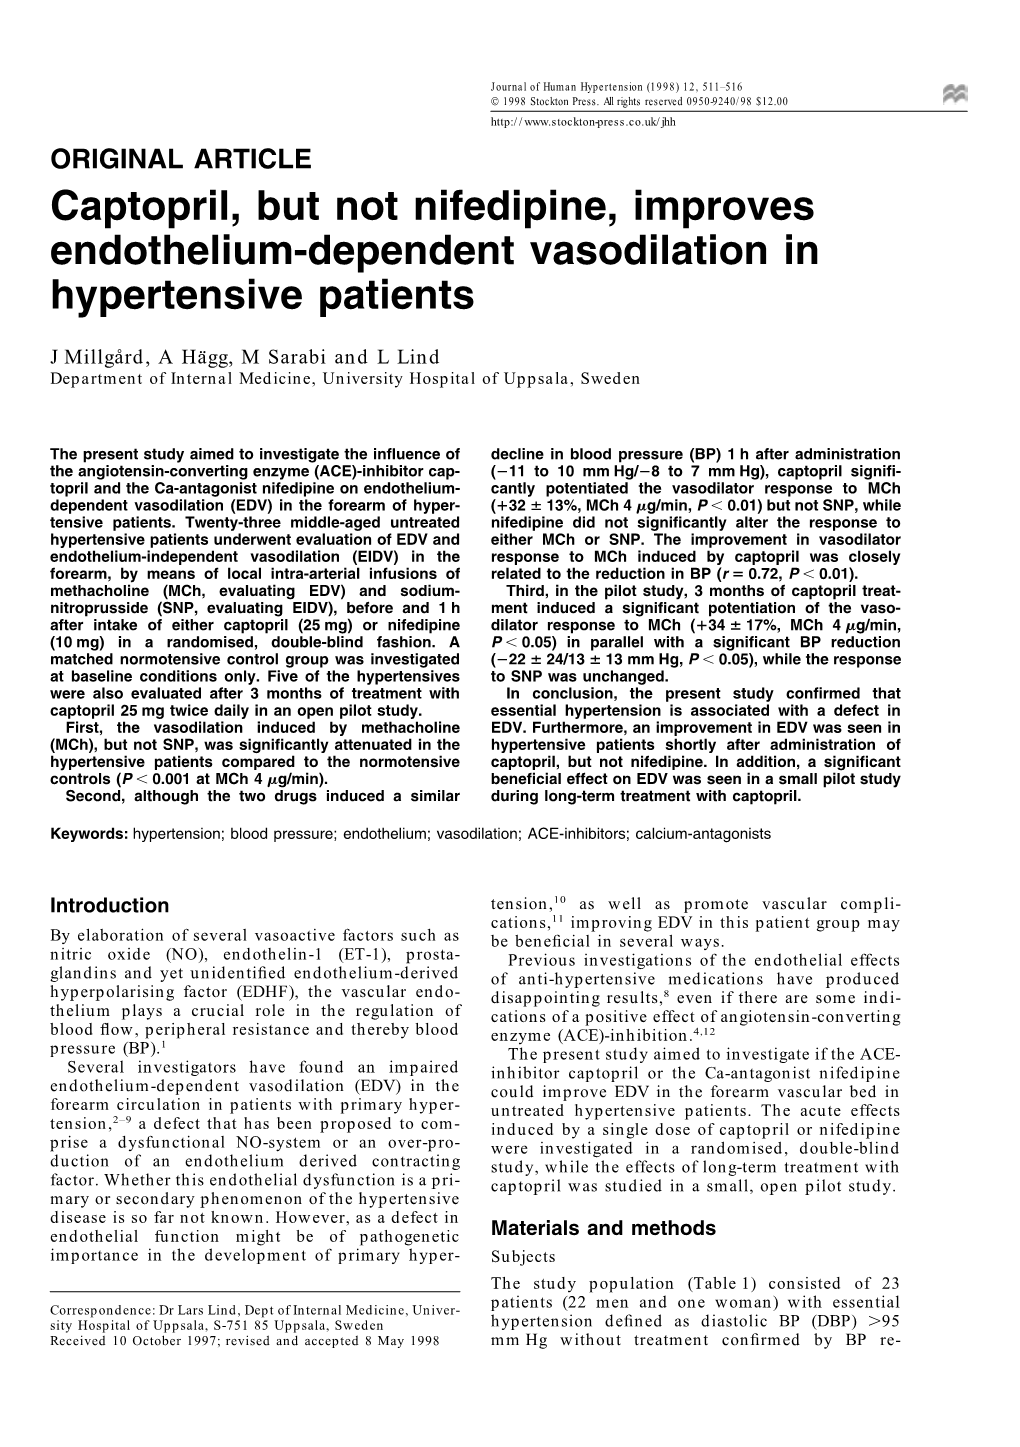 Captopril, but Not Nifedipine, Improves Endothelium-Dependent Vasodilation in Hypertensive Patients